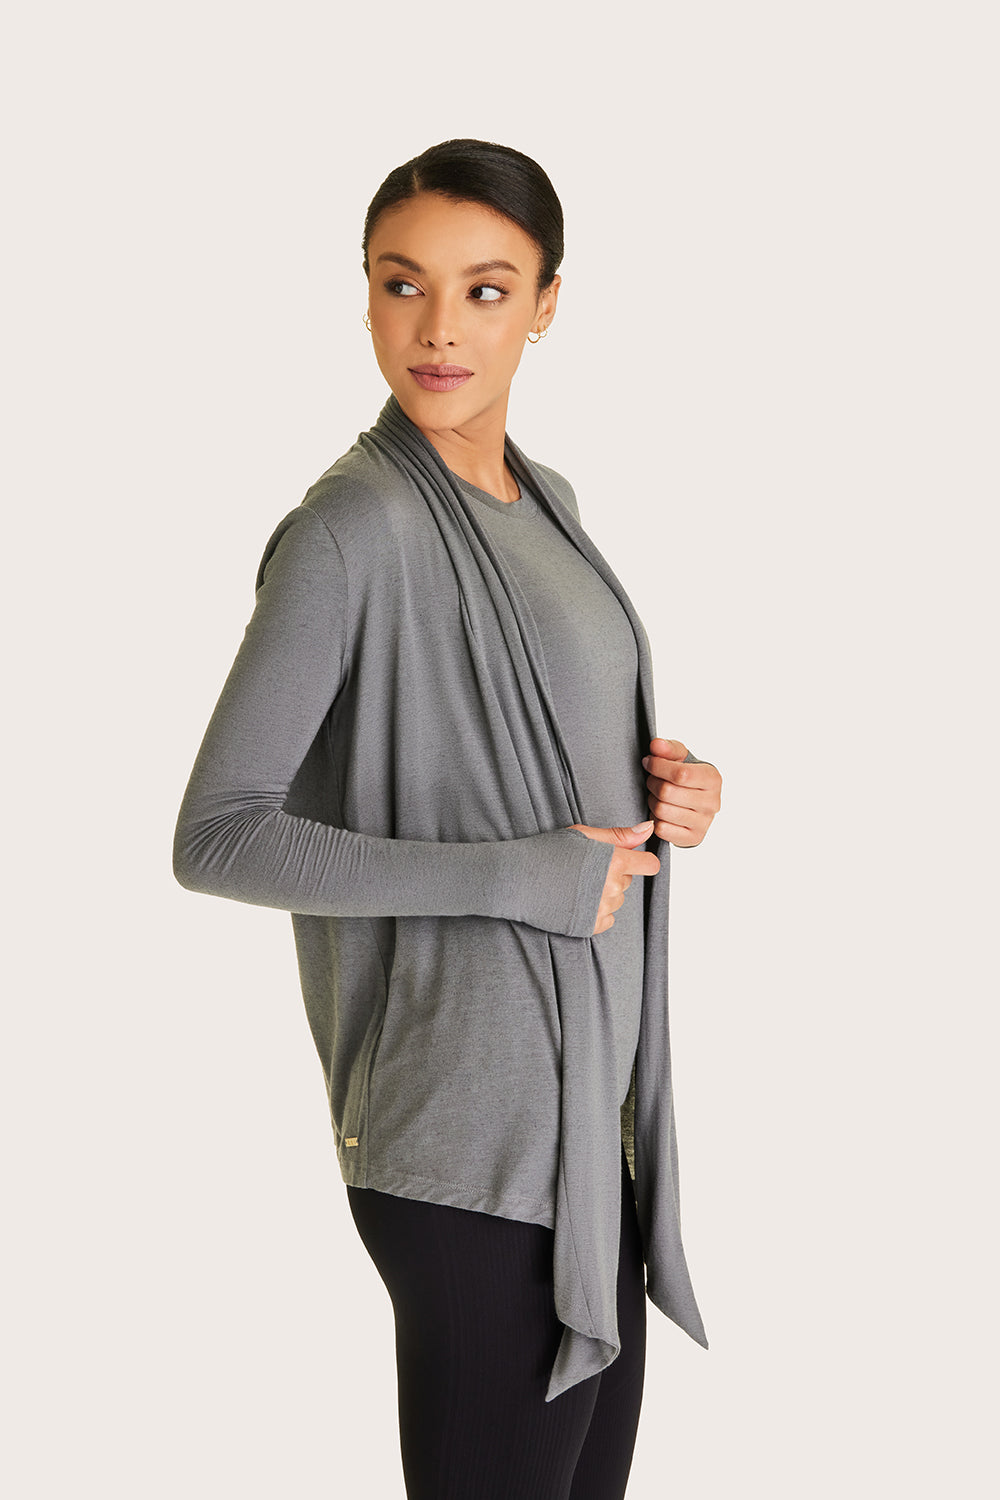 Alala women's cashmere open cardigan in grey